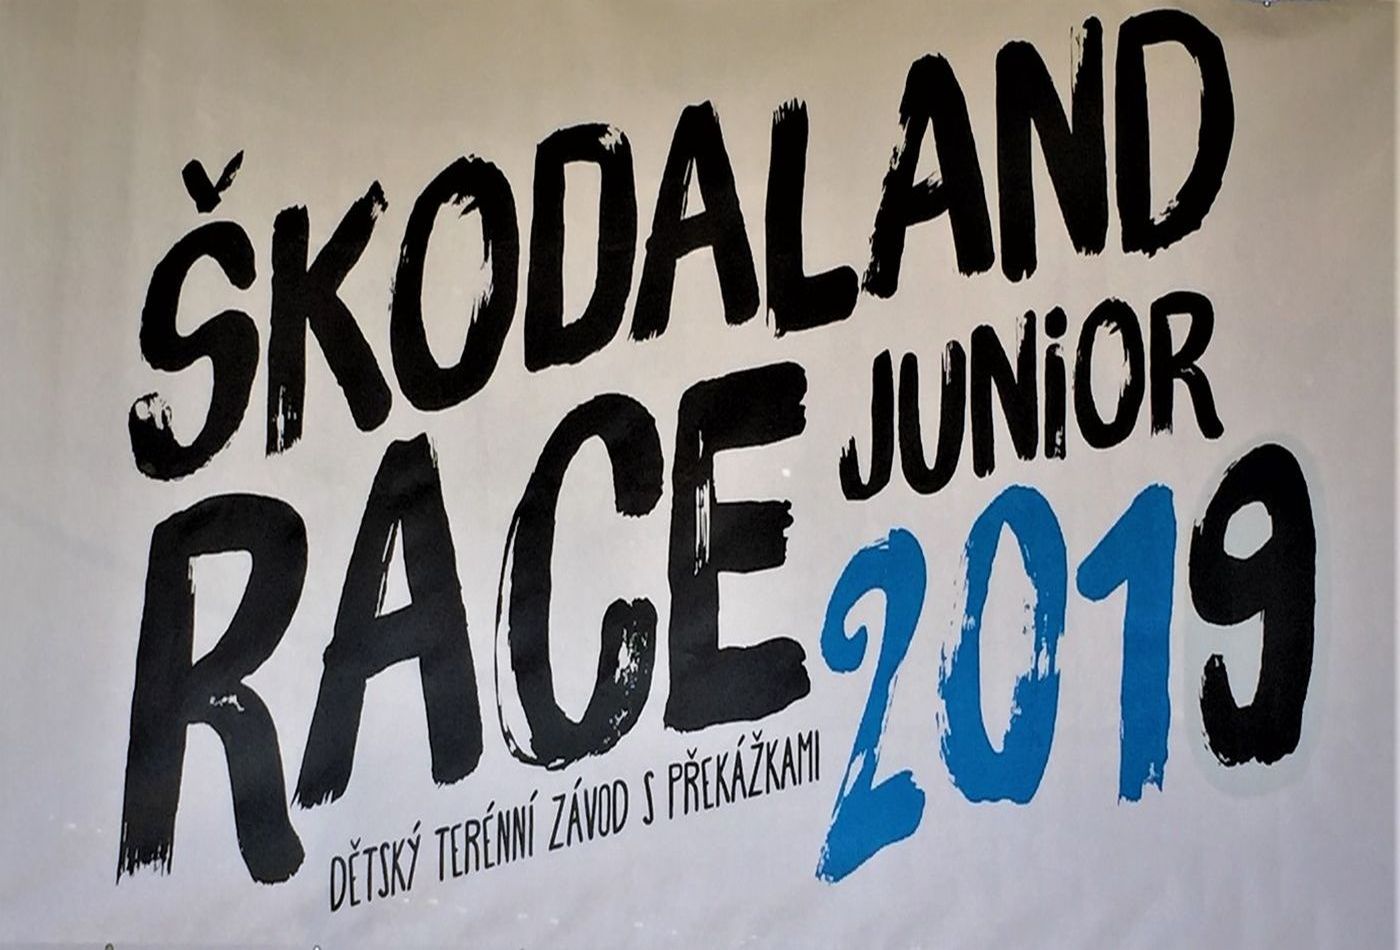 Škodaland Race Junior 623